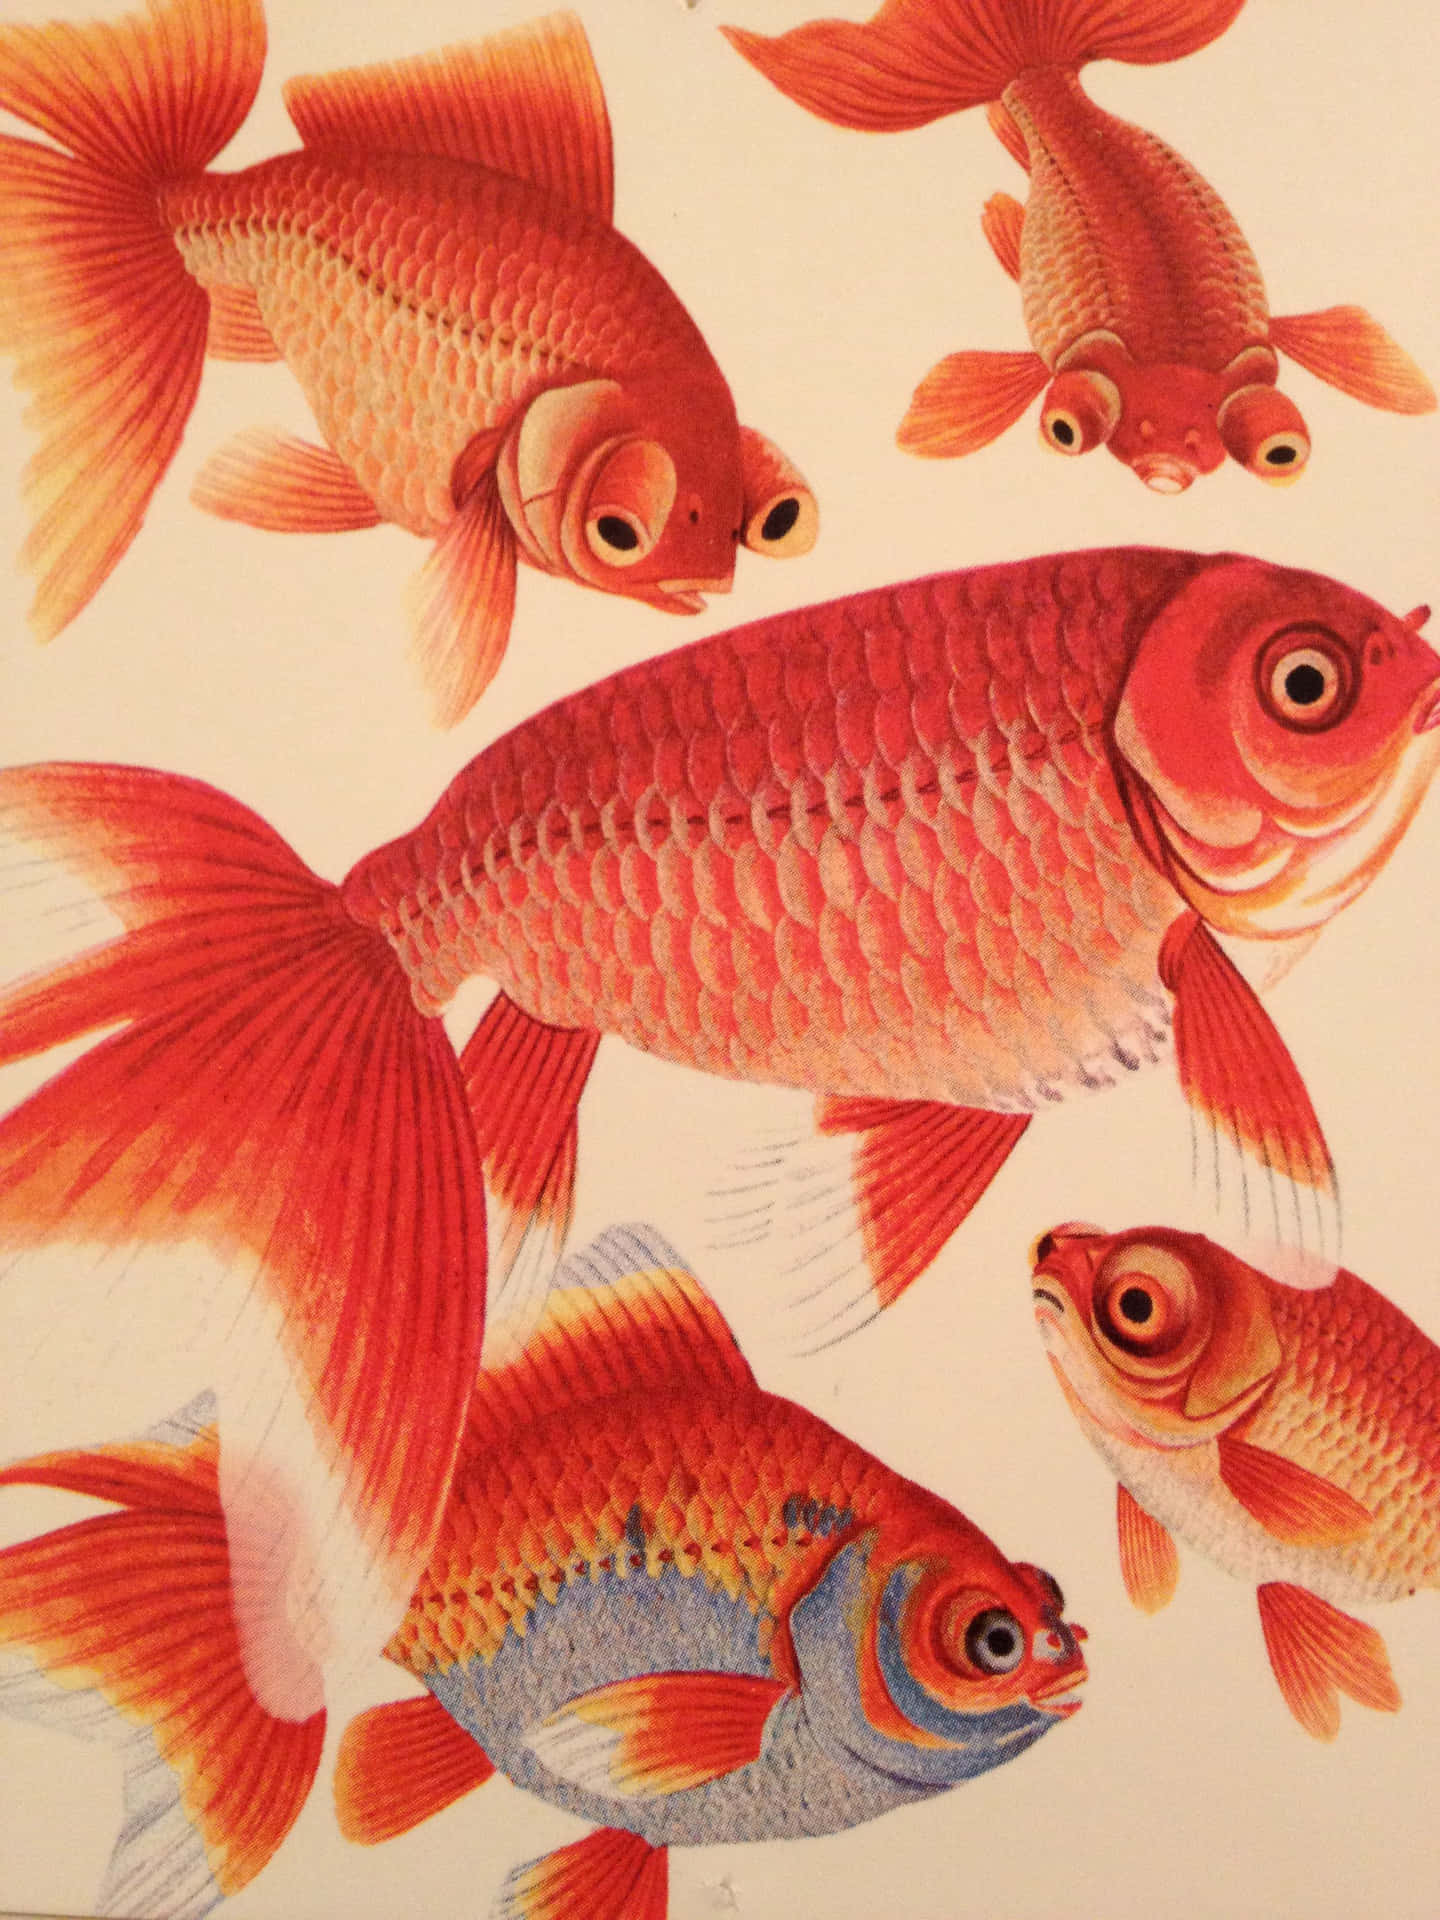 Brightly-colored Goldfish swimming harmoniously